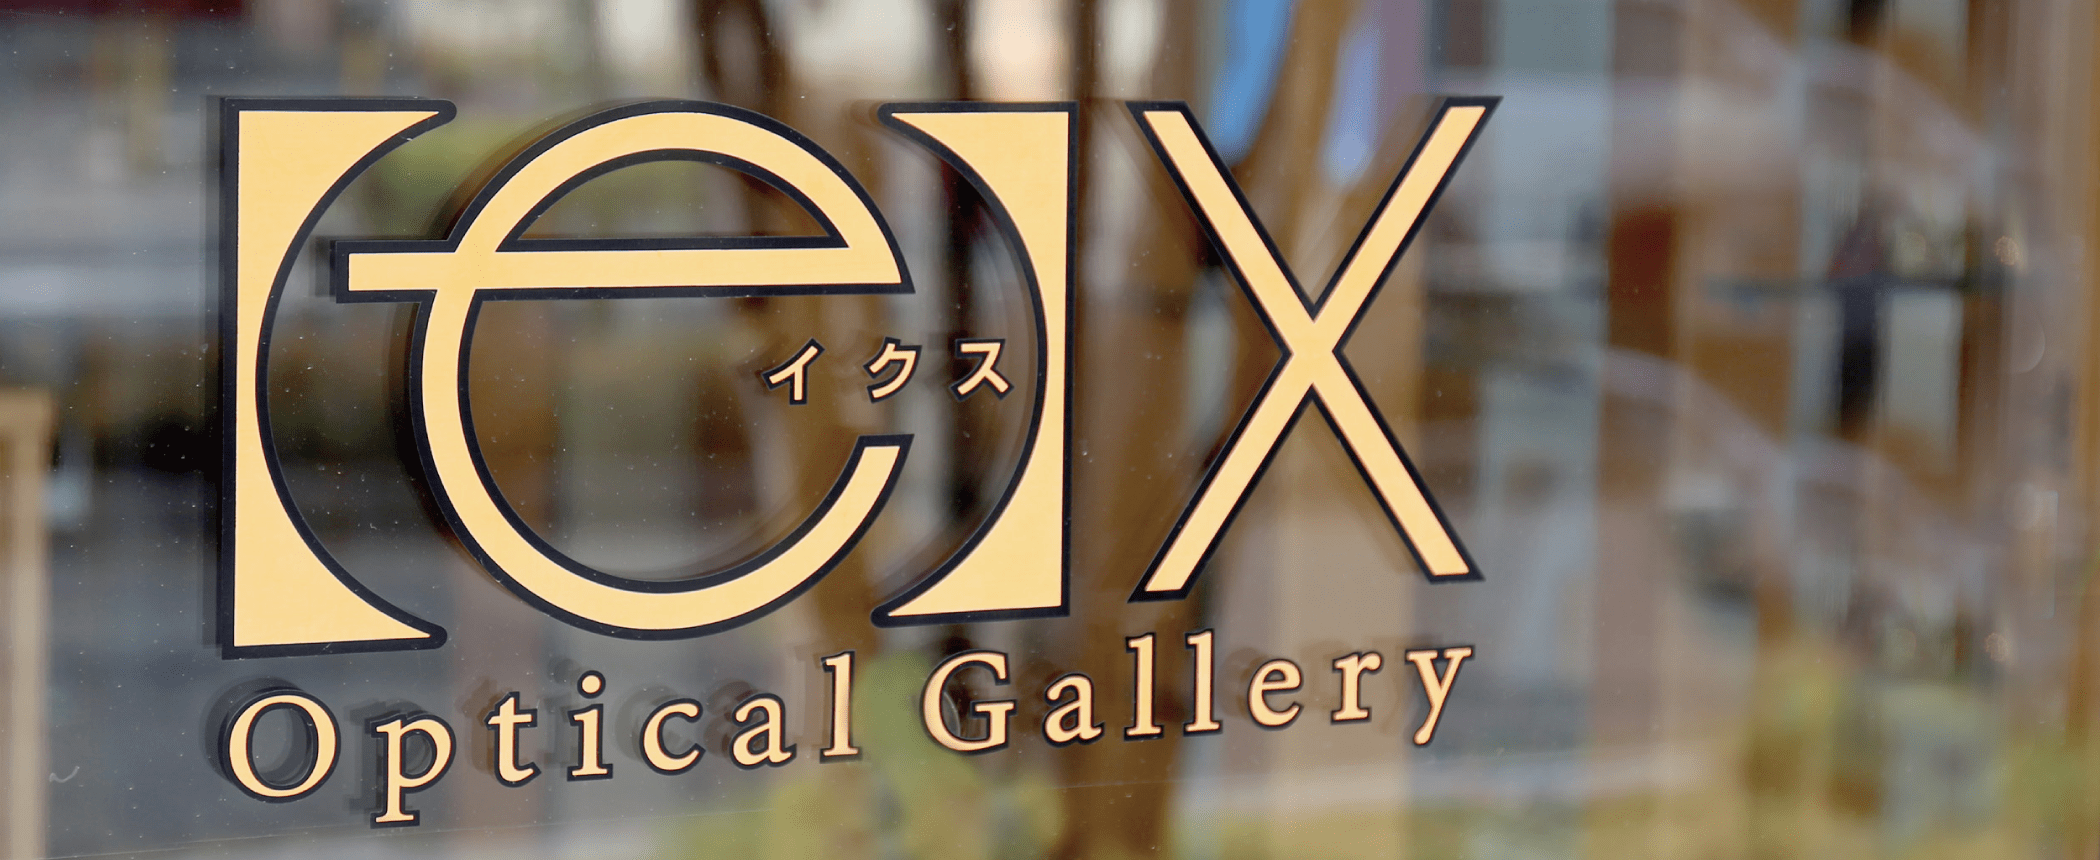 Optical Gallery ex 佐沼店